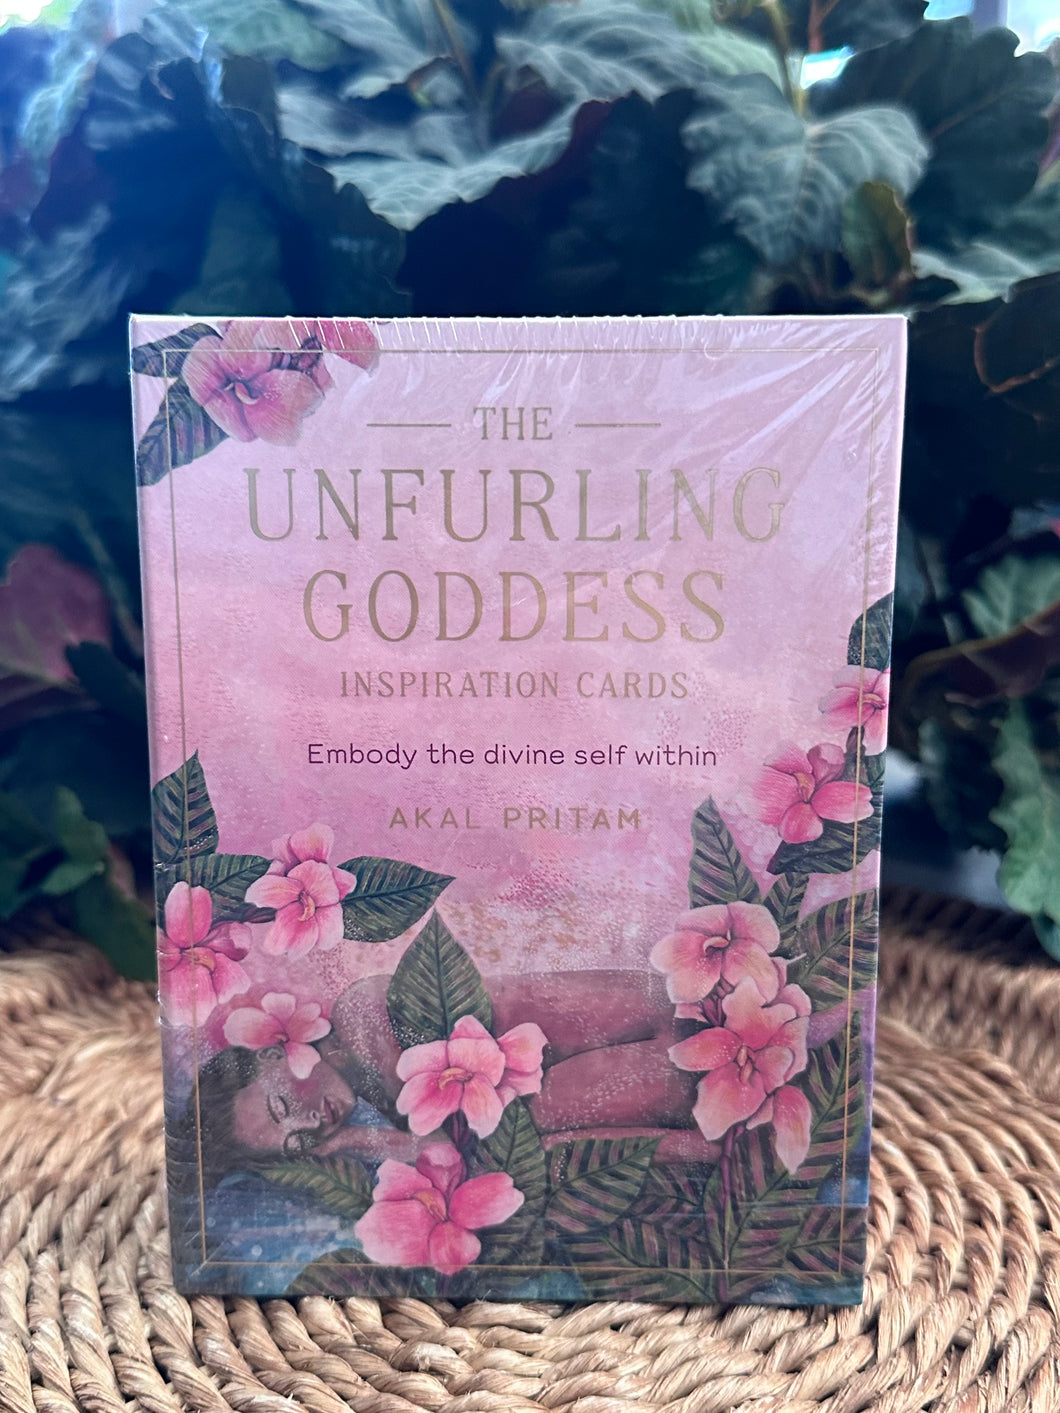 The Unfurling Goddess Inspiration Cards